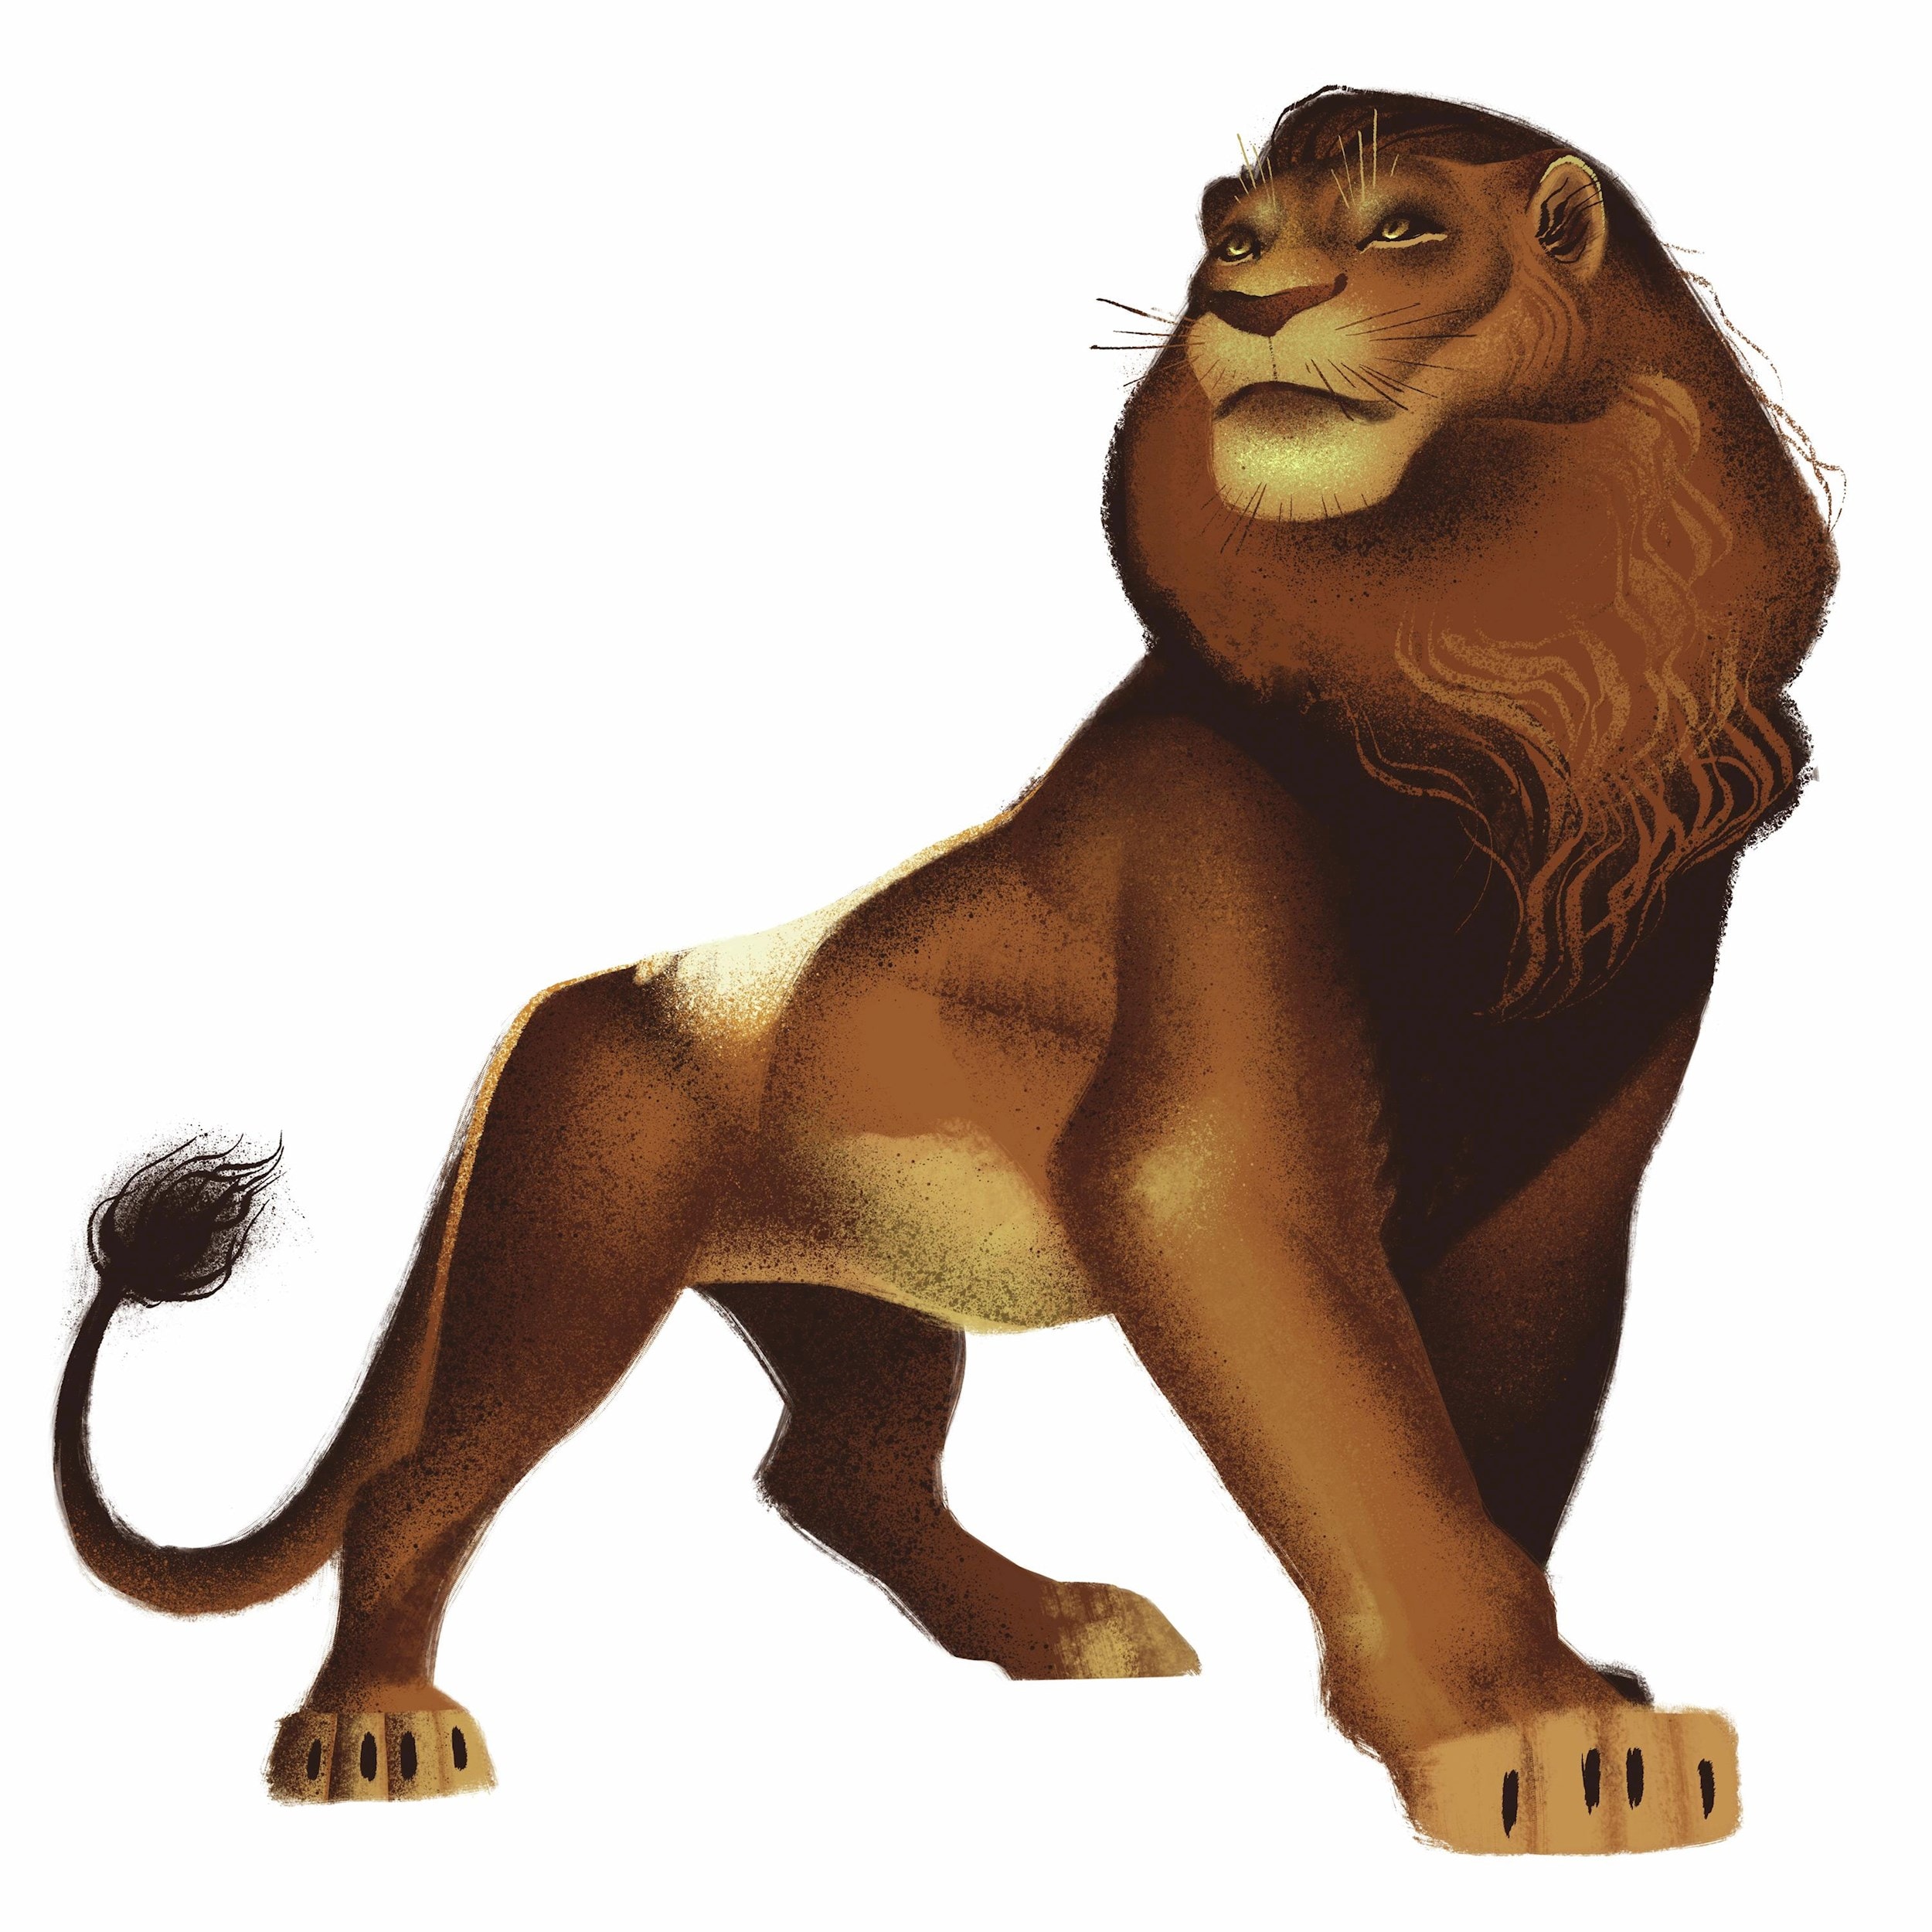 Sticker Geant Simba Film Le Roi Lion Disney 64 X 66 Cm ROOMMATES